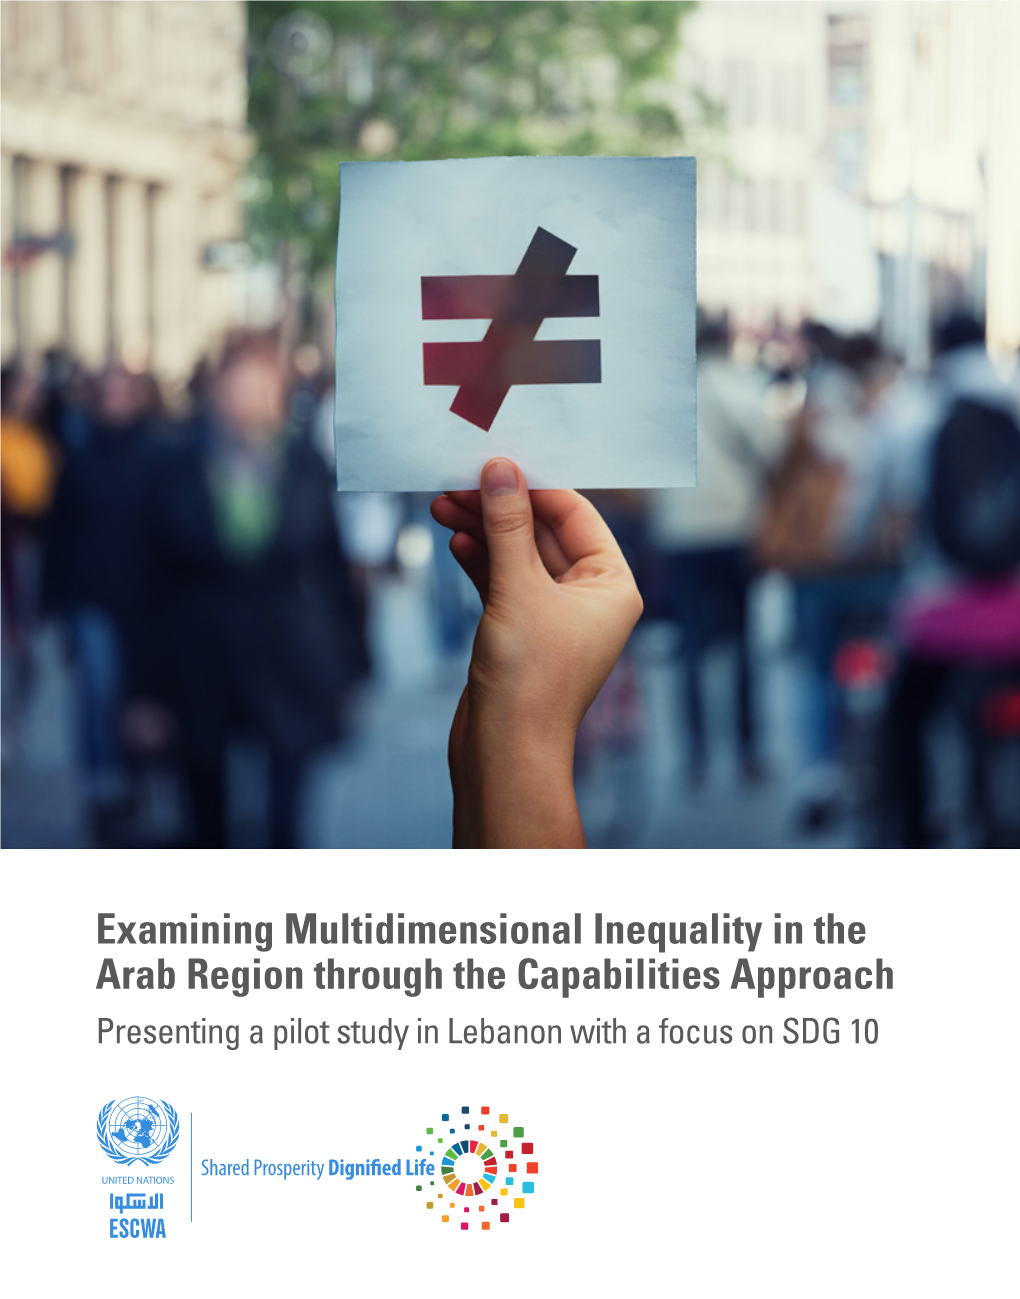 Examining Multidimensional Inequality in the Arab Region Through a Capabilities Lens